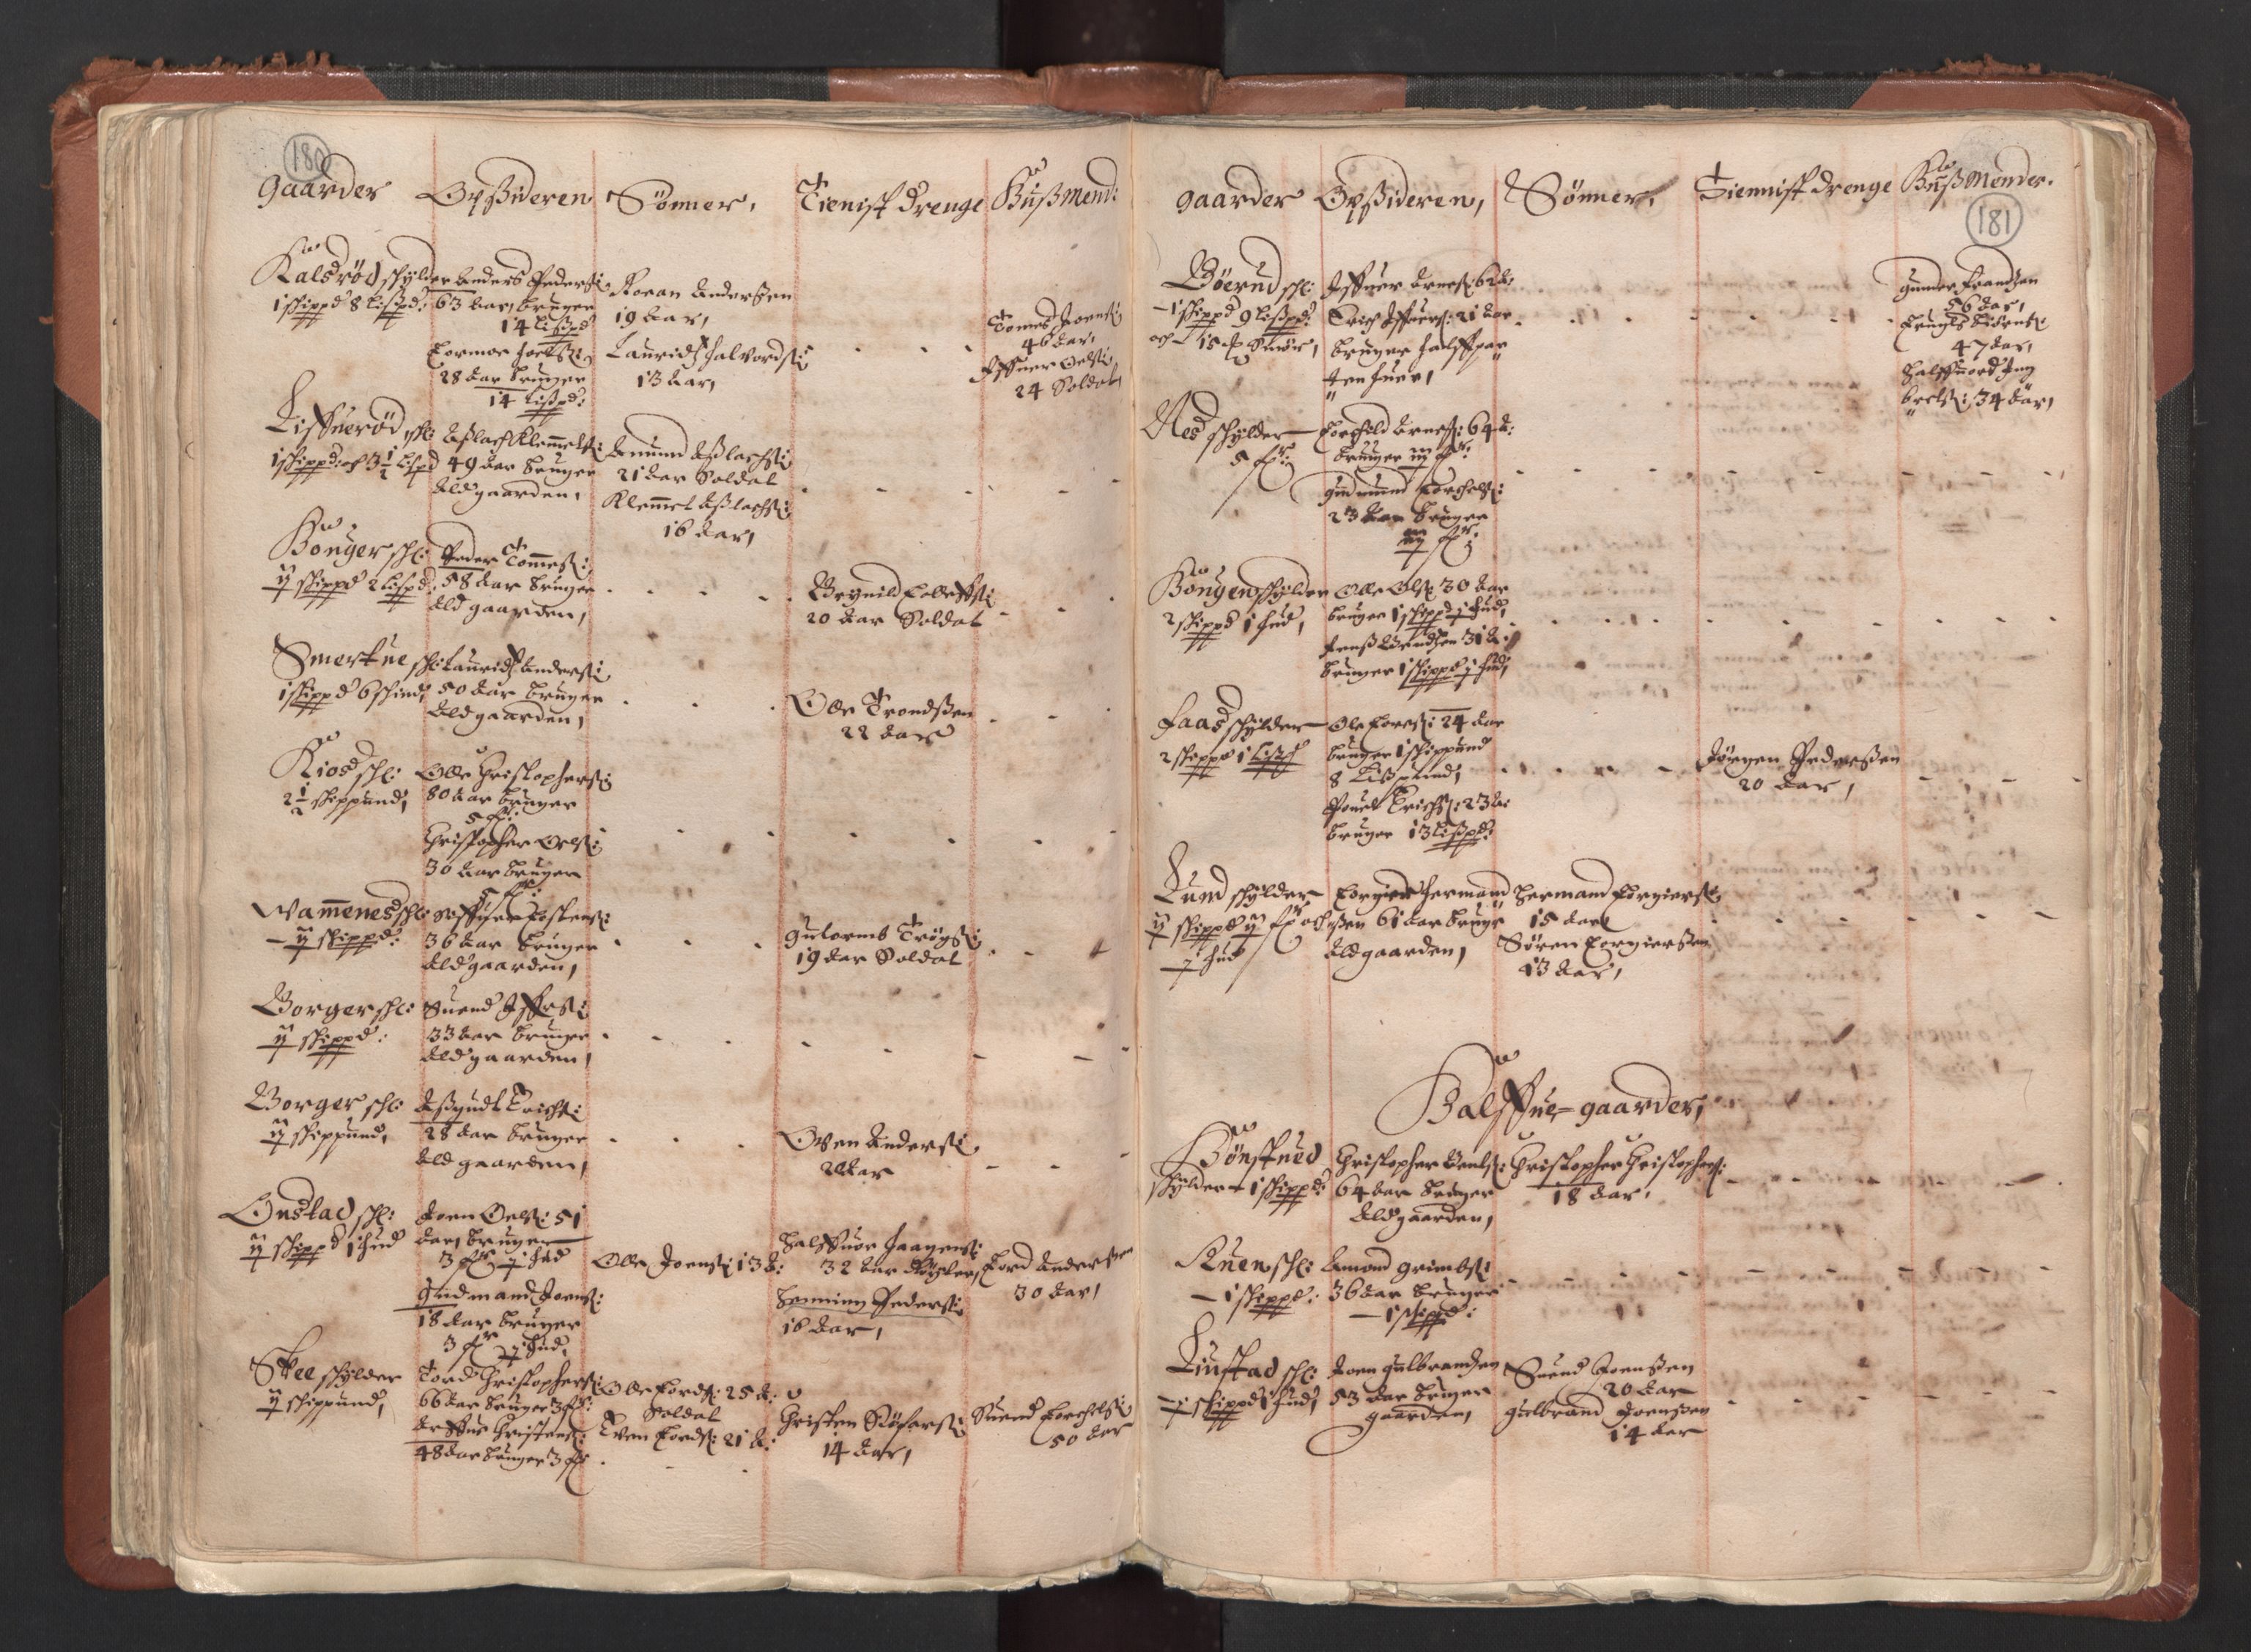 RA, Fogdenes og sorenskrivernes manntall 1664-1666, nr. 1: Fogderier (len og skipreider) i nåværende Østfold fylke, 1664, s. 180-181